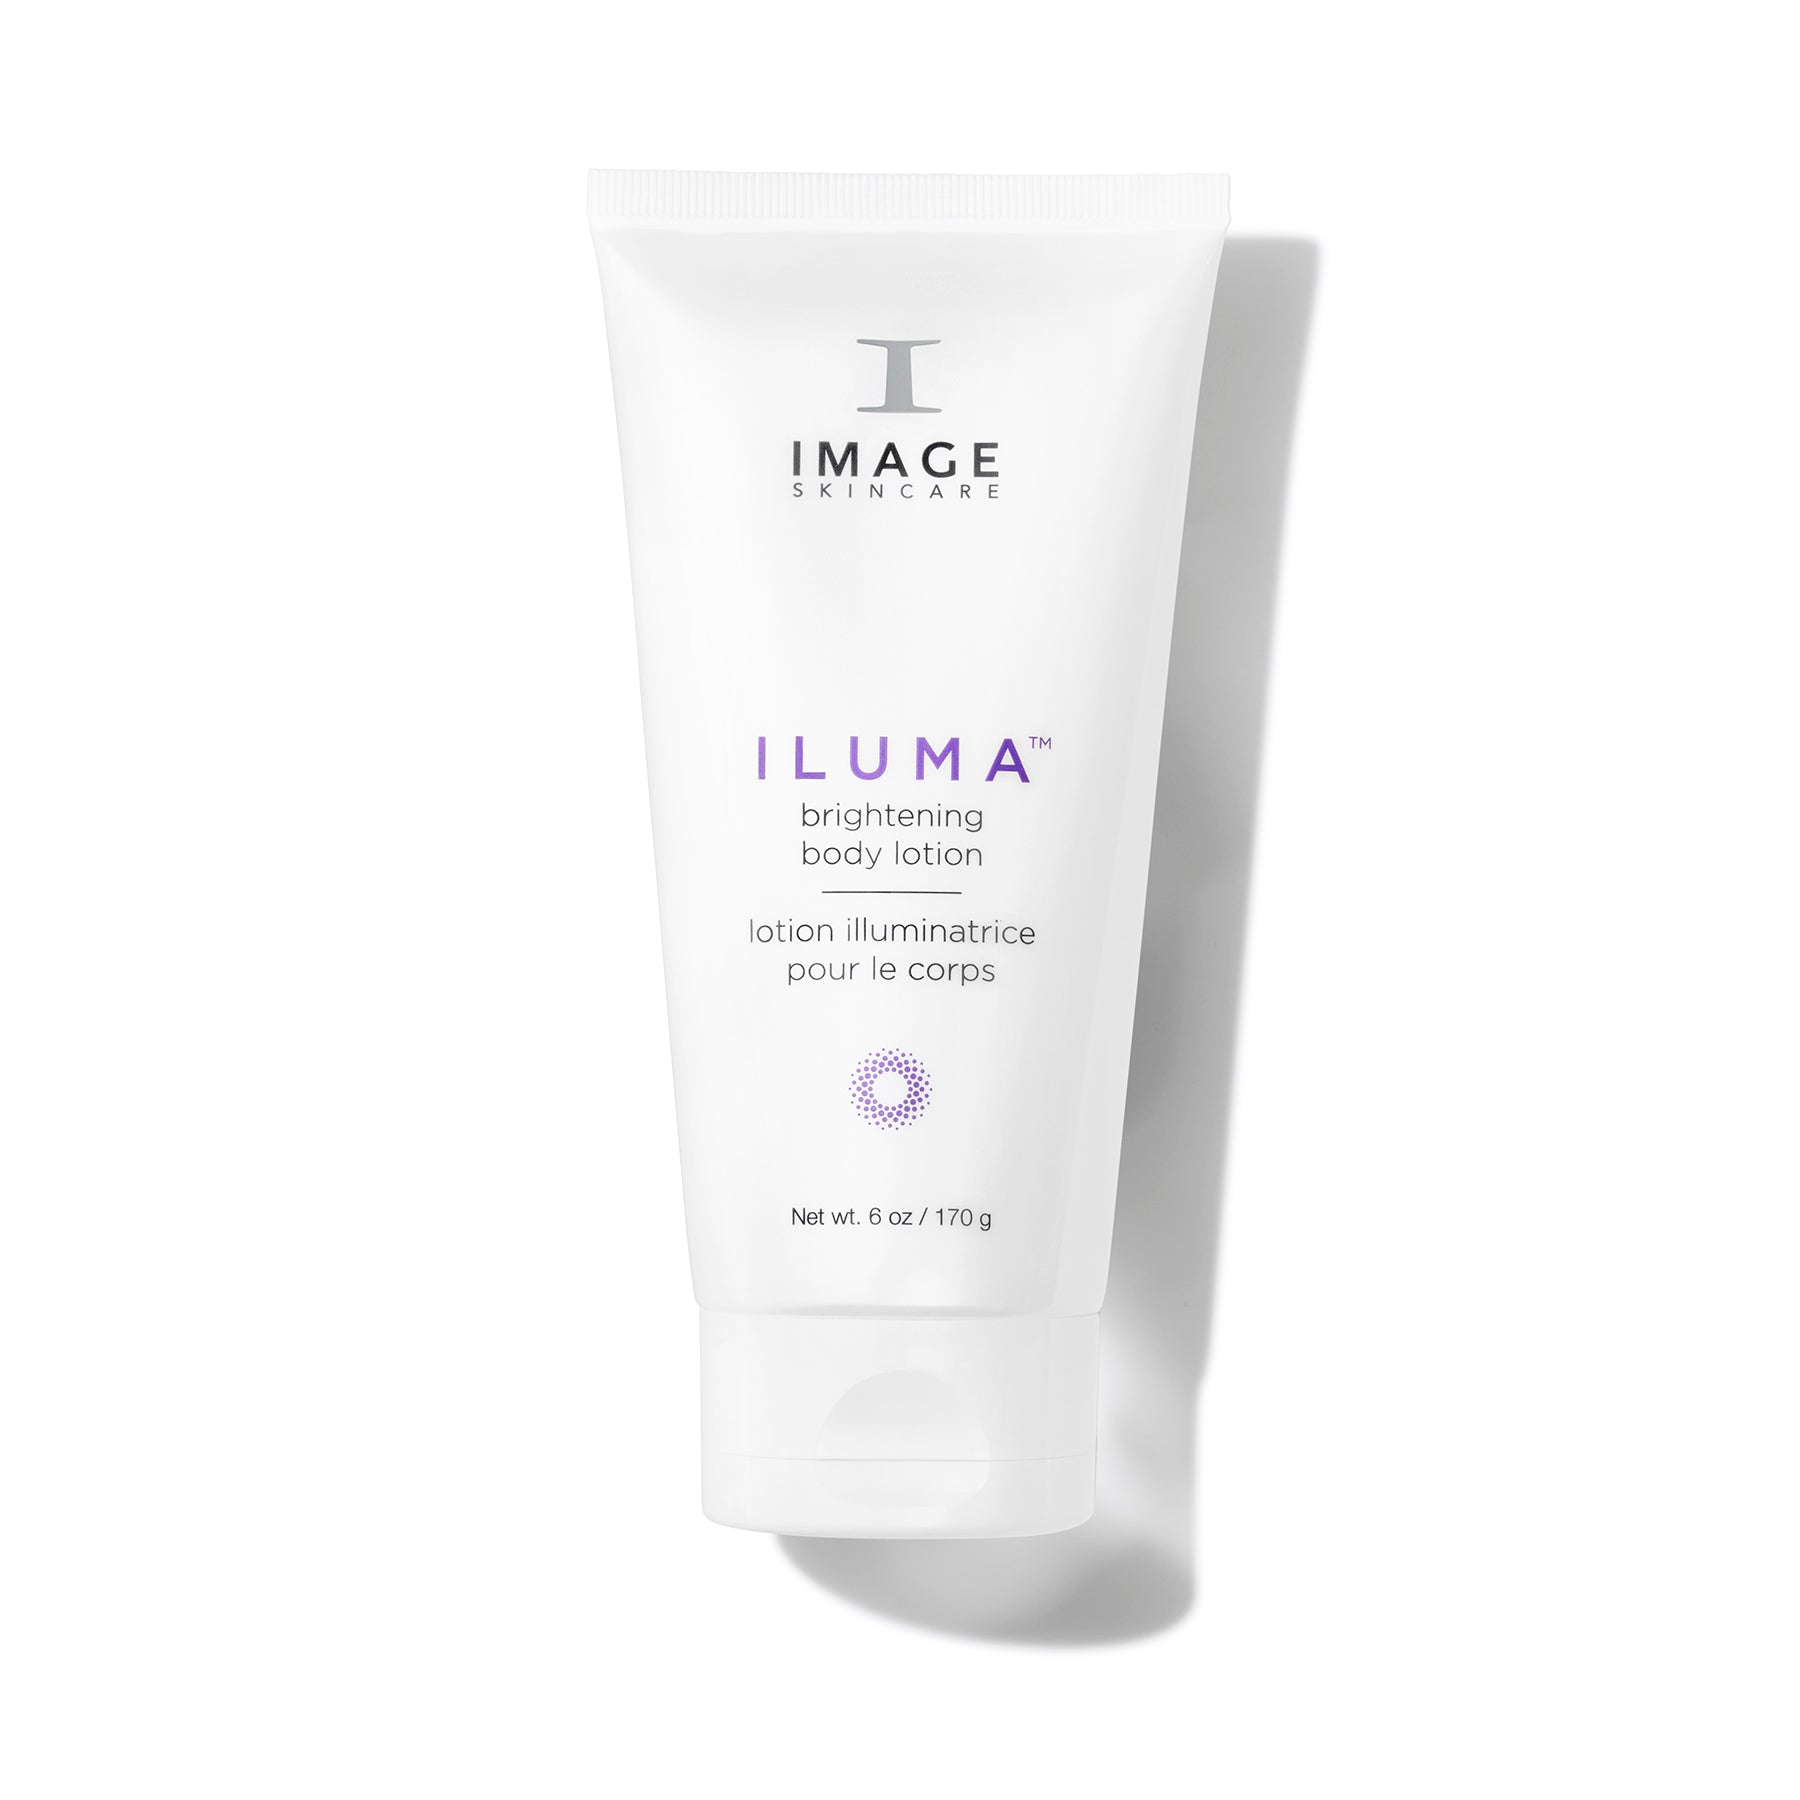 Image Skincare Iluma Intense Brightening Body Lotion Shop At Exclusive Beauty